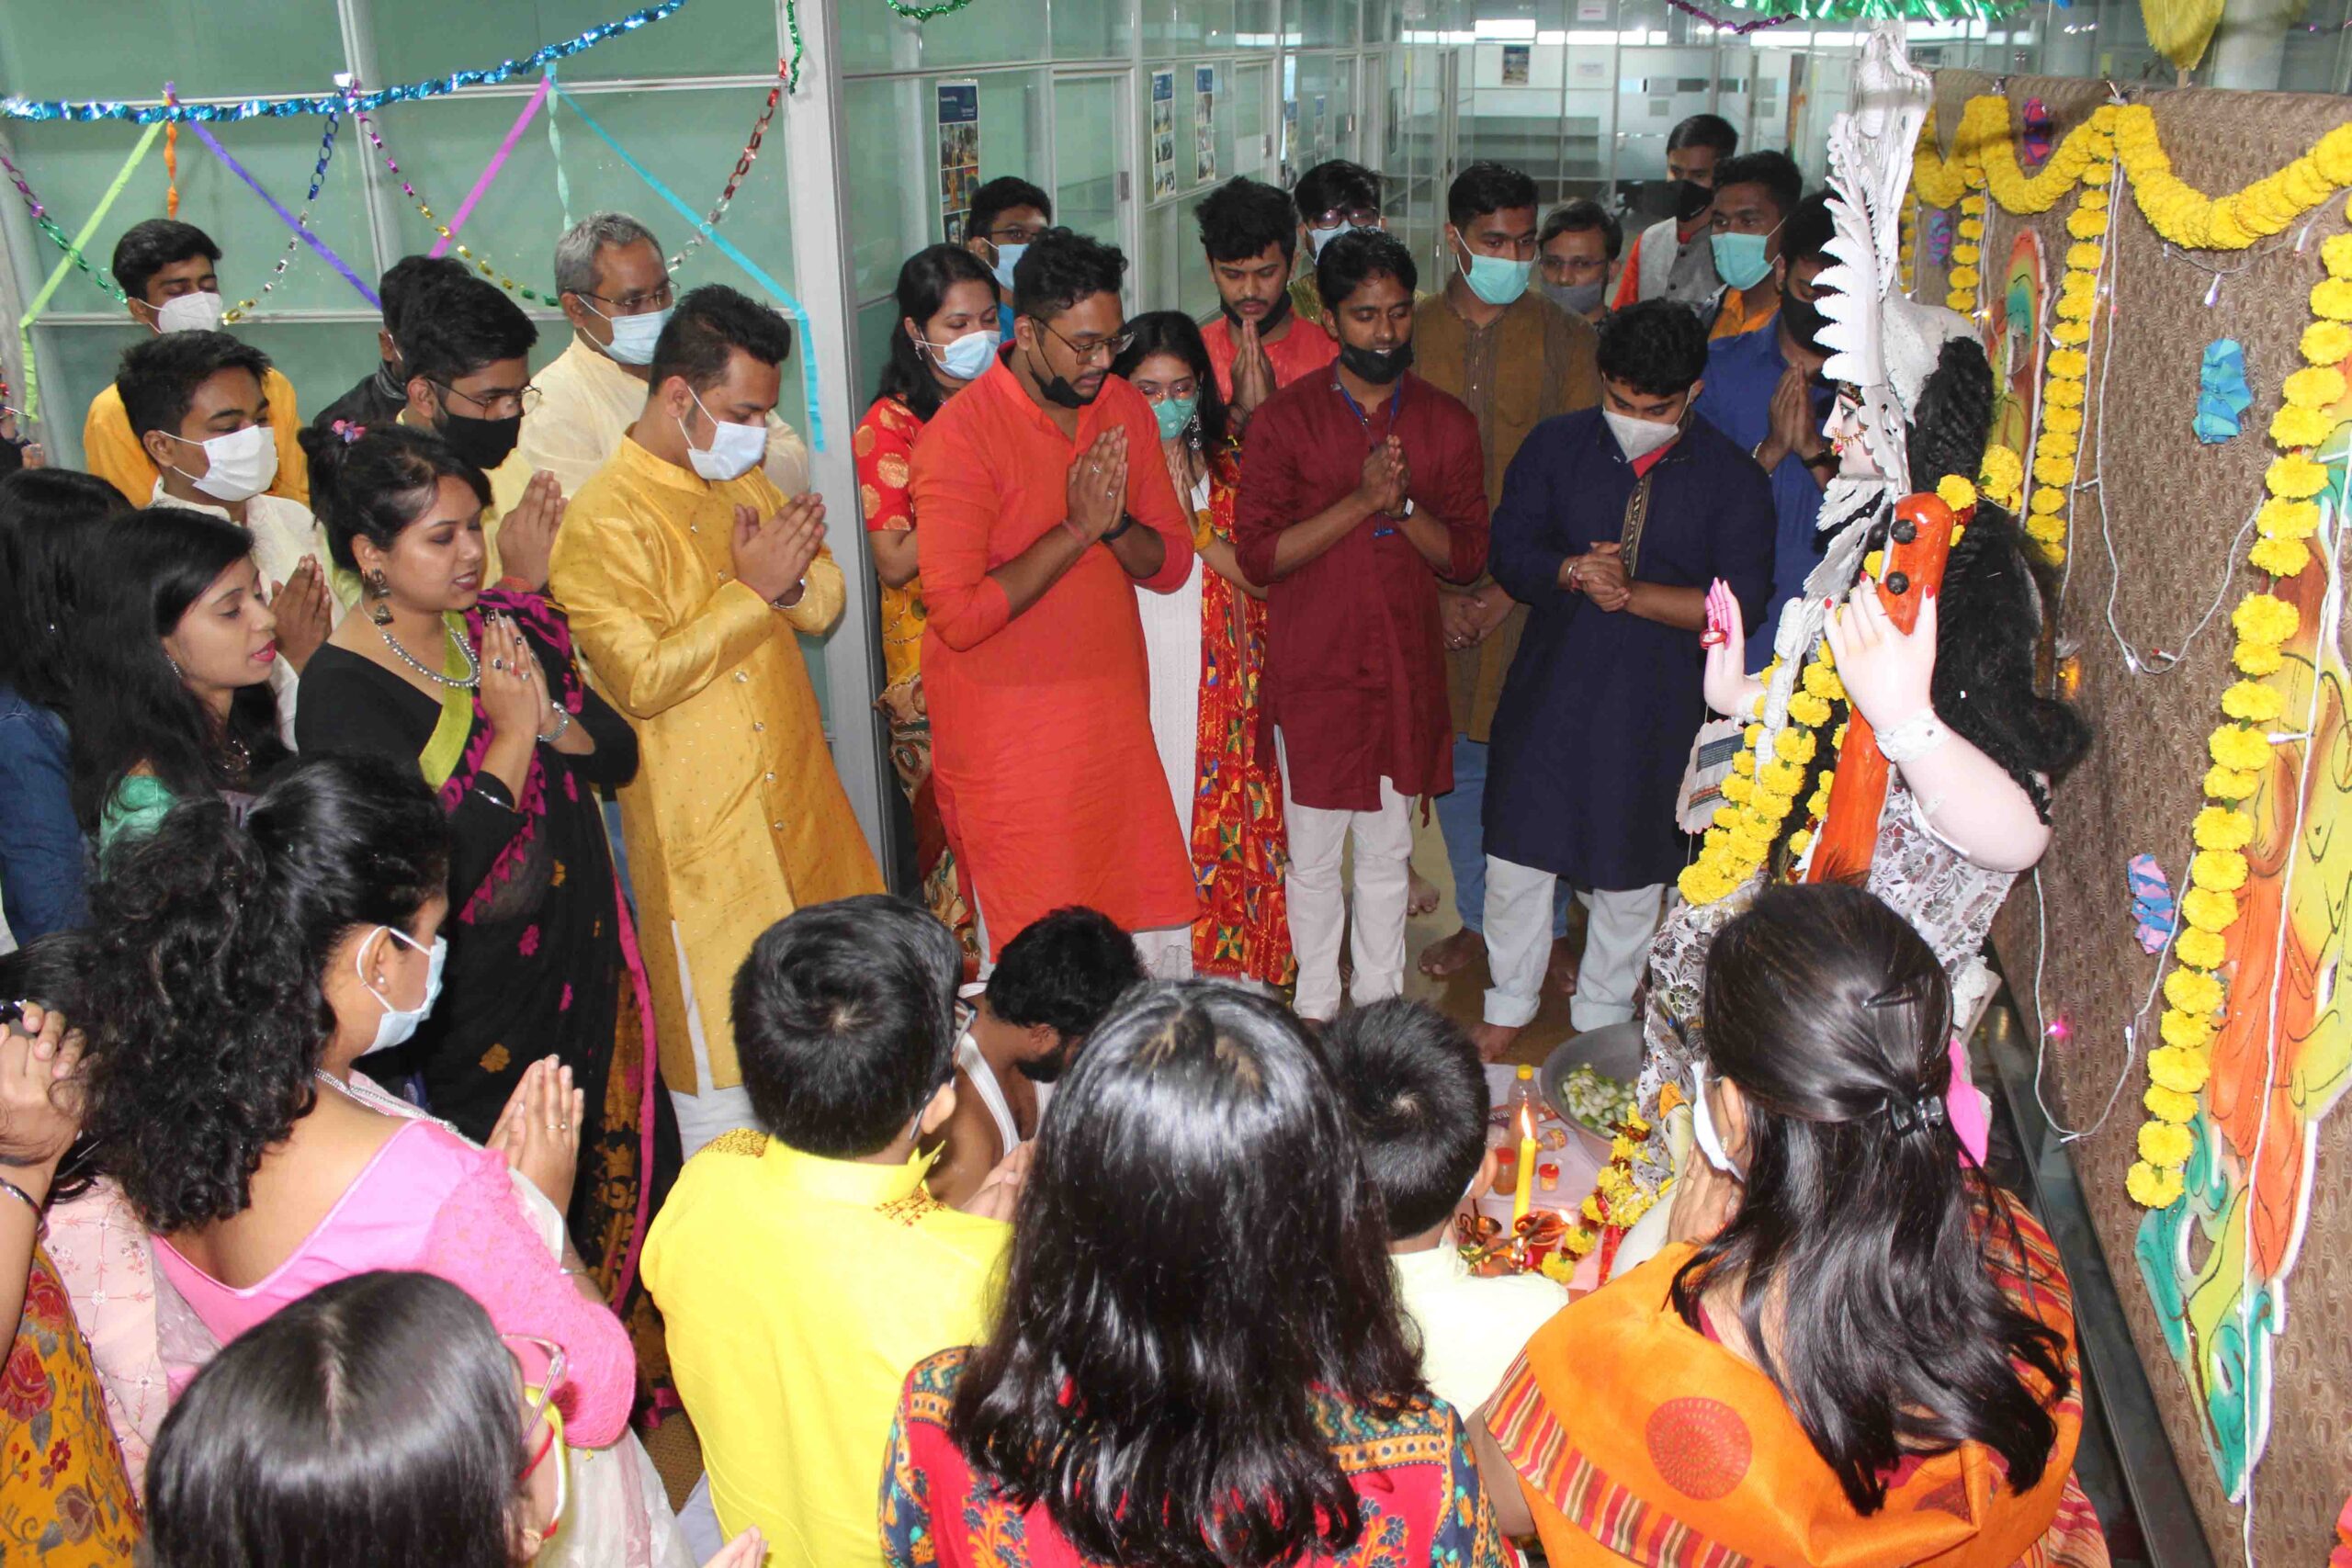 IQ City of UWSB celebrated Saraswati Puja 2022